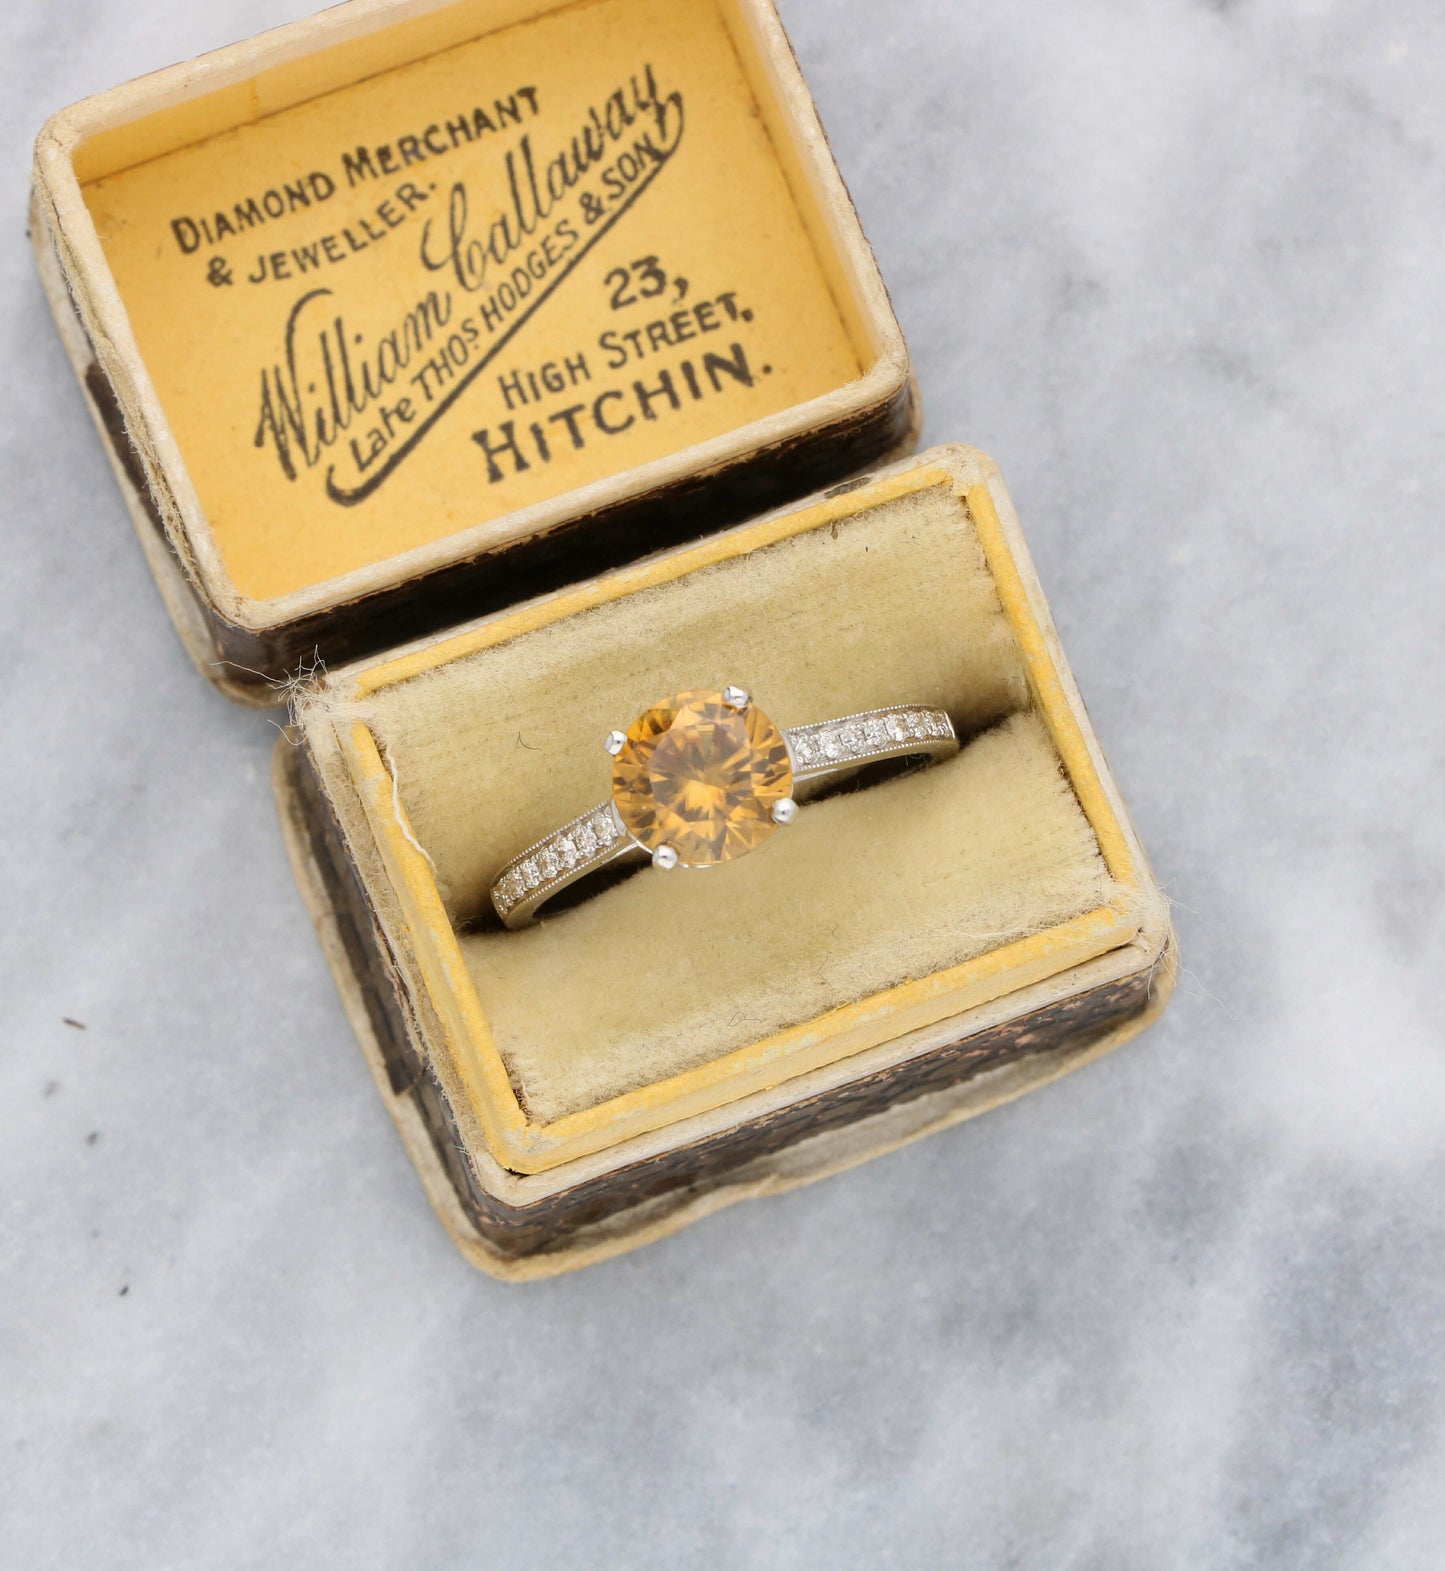 18ct golden zircon and diamond ring